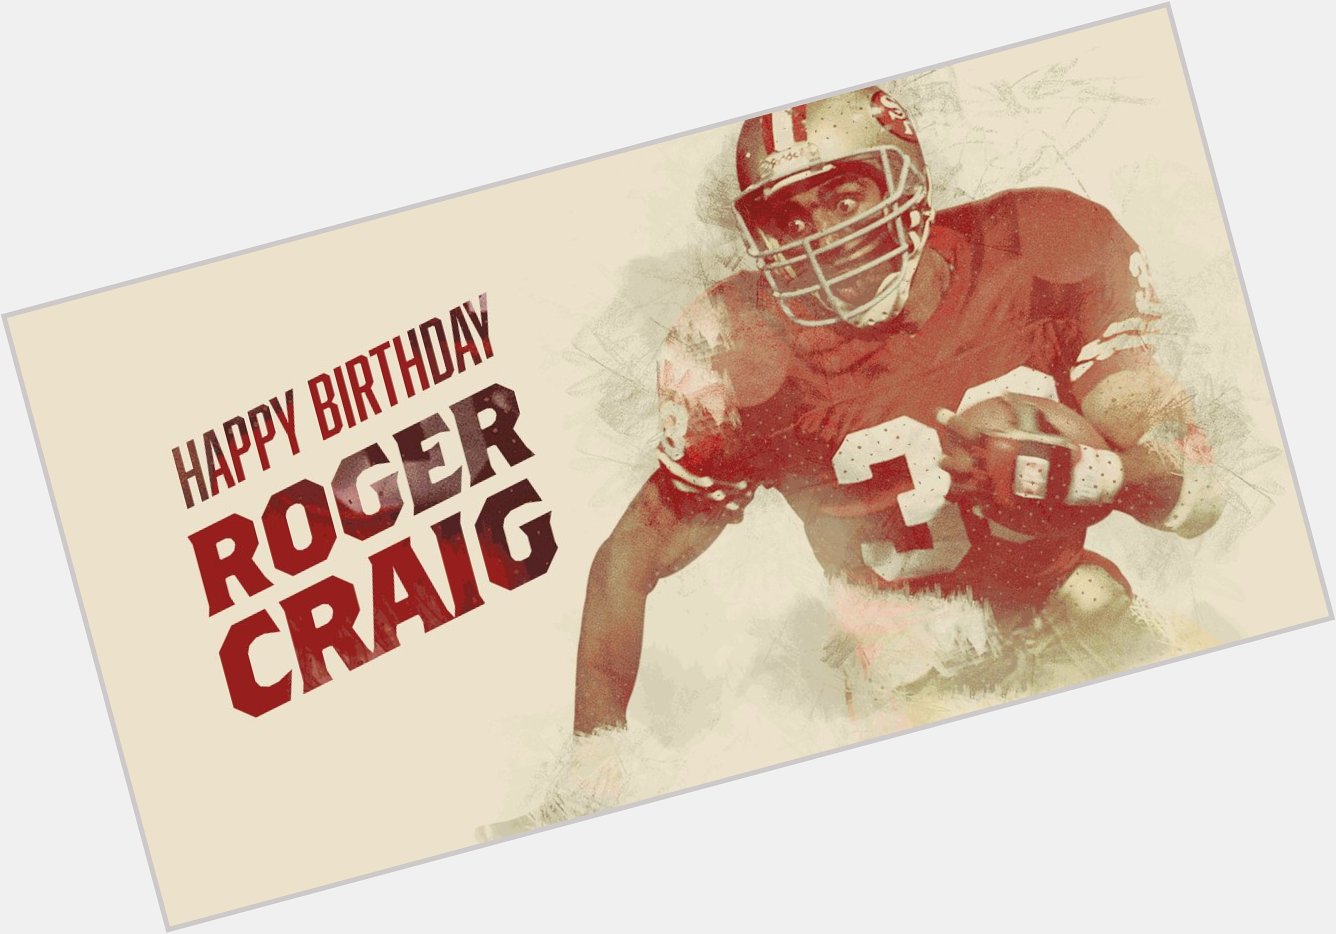 Help us wish Roger Craig a very happy birthday! 